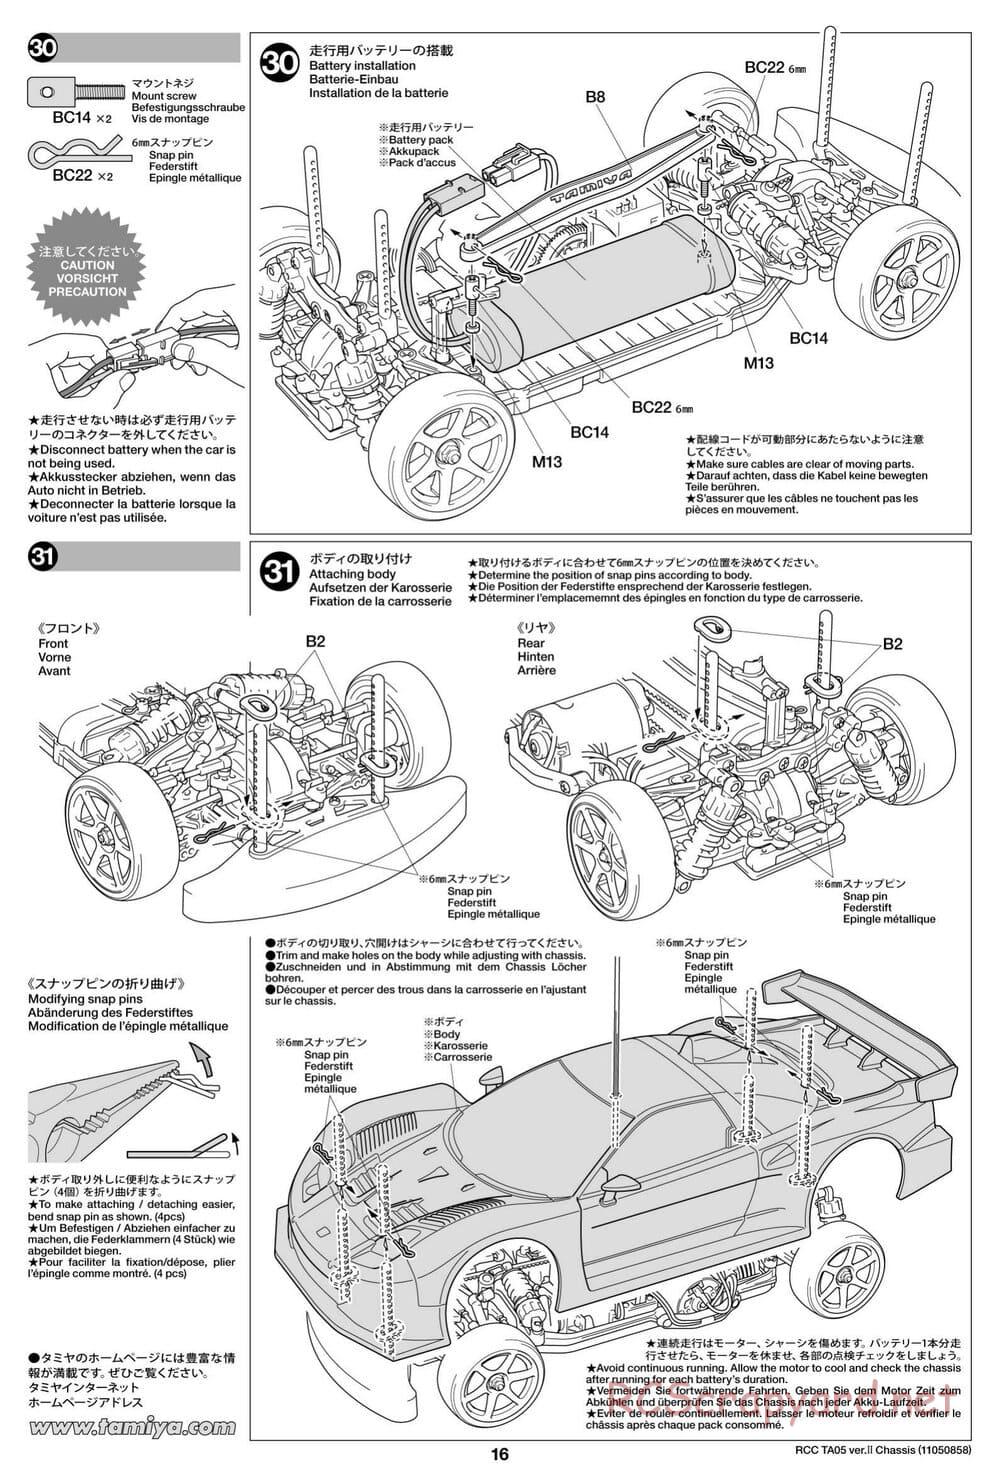 Tamiya - TA05 Ver.II Chassis - Manual - Page 16